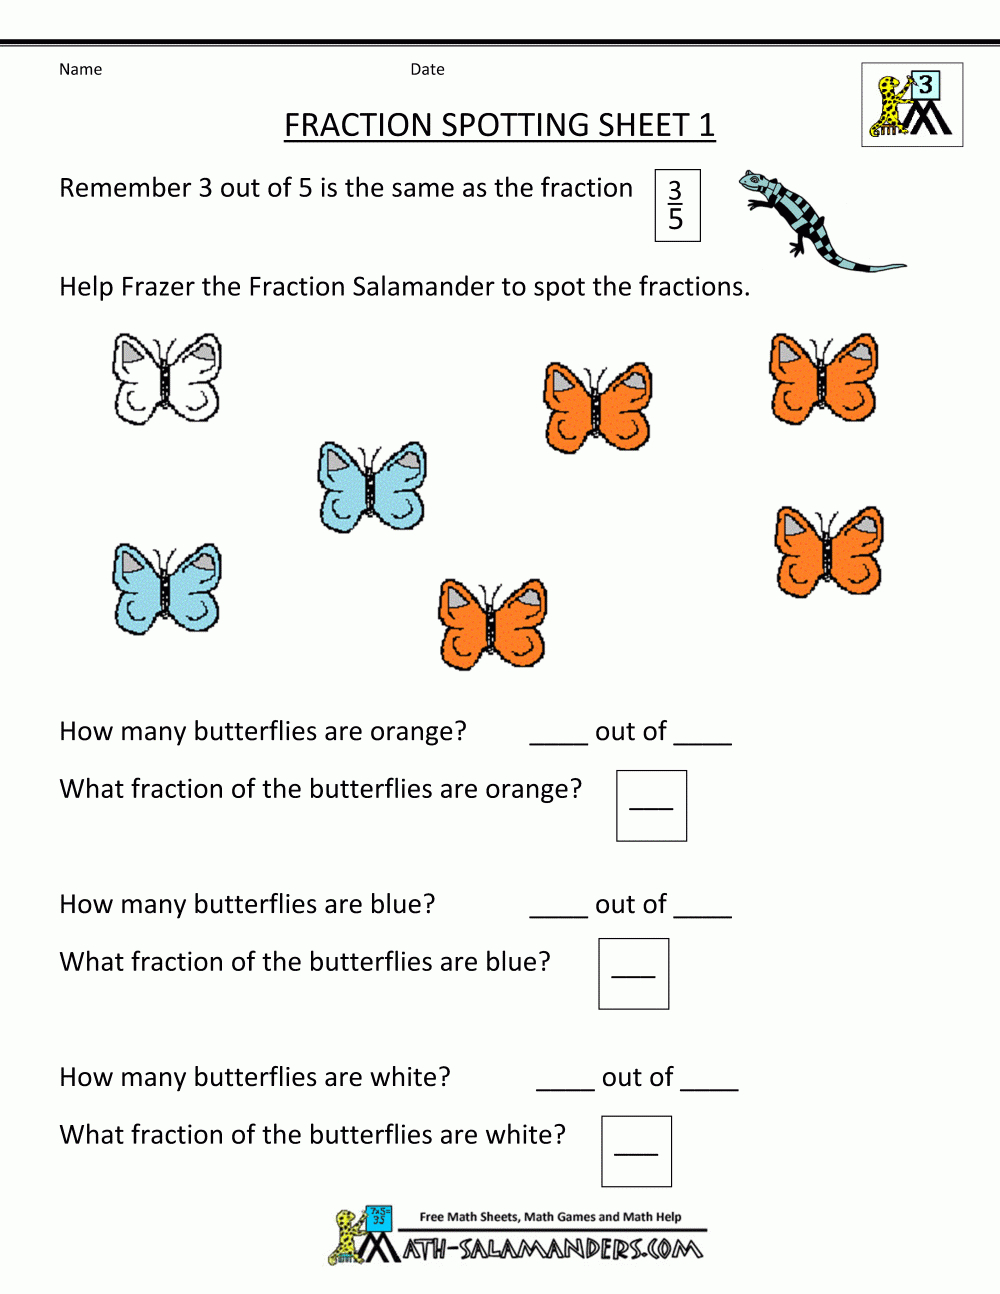 Finding Fractions - Fraction Spotting | Free Printable Fraction Worksheets For Third Grade